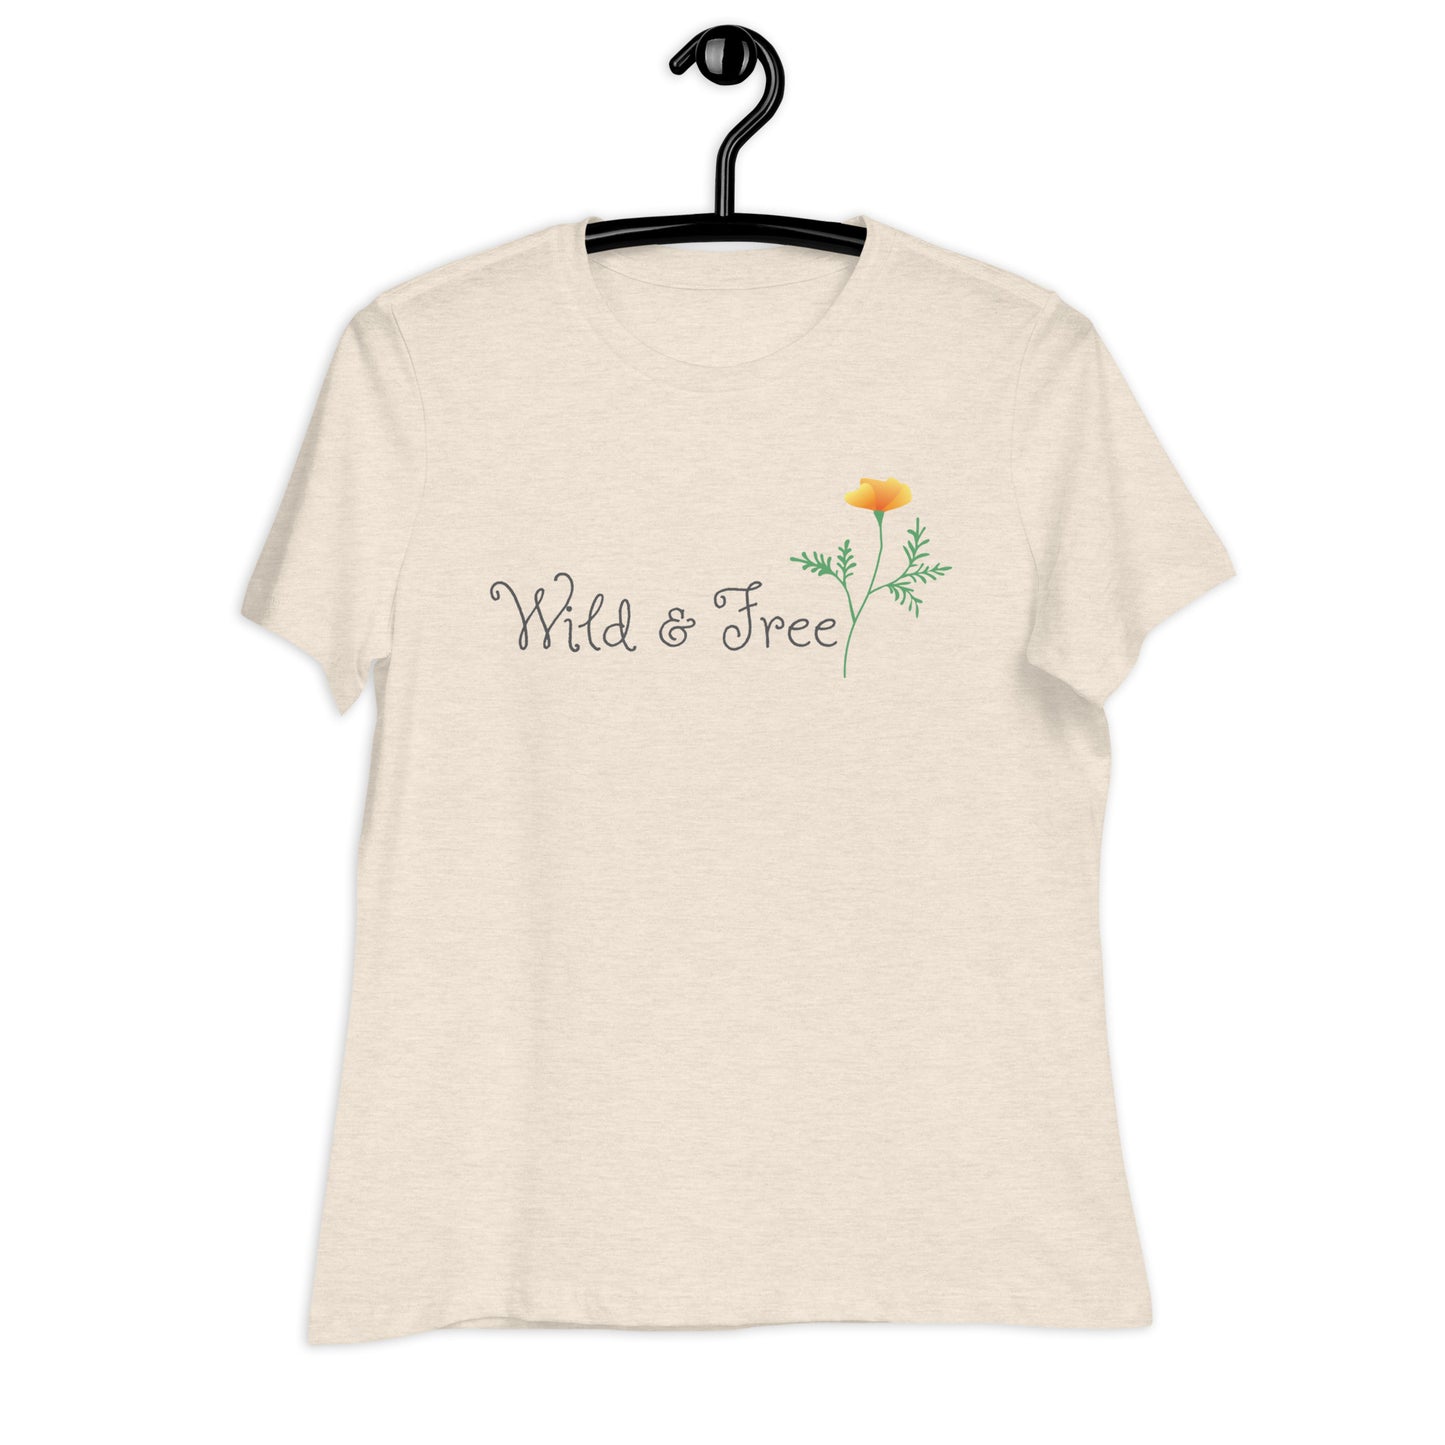 Wild & Free Women's Relaxed T-Shirt